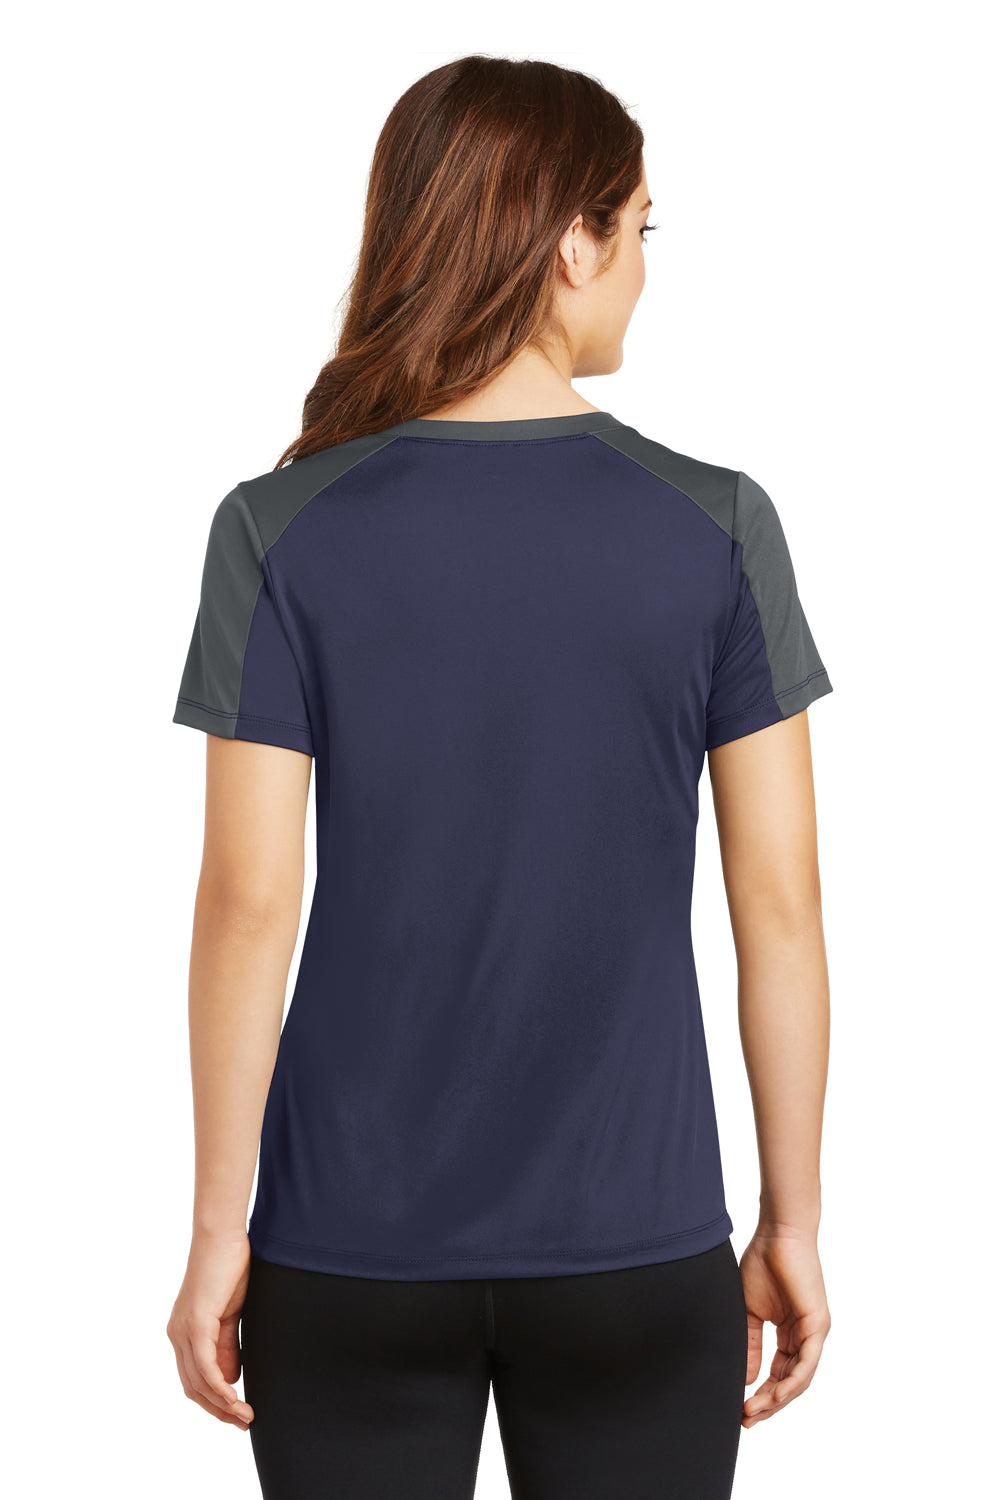 Sport-Tek LST354 Womens Competitor Moisture Wicking Short Sleeve V-Neck T-Shirt Navy Blue/Grey Back